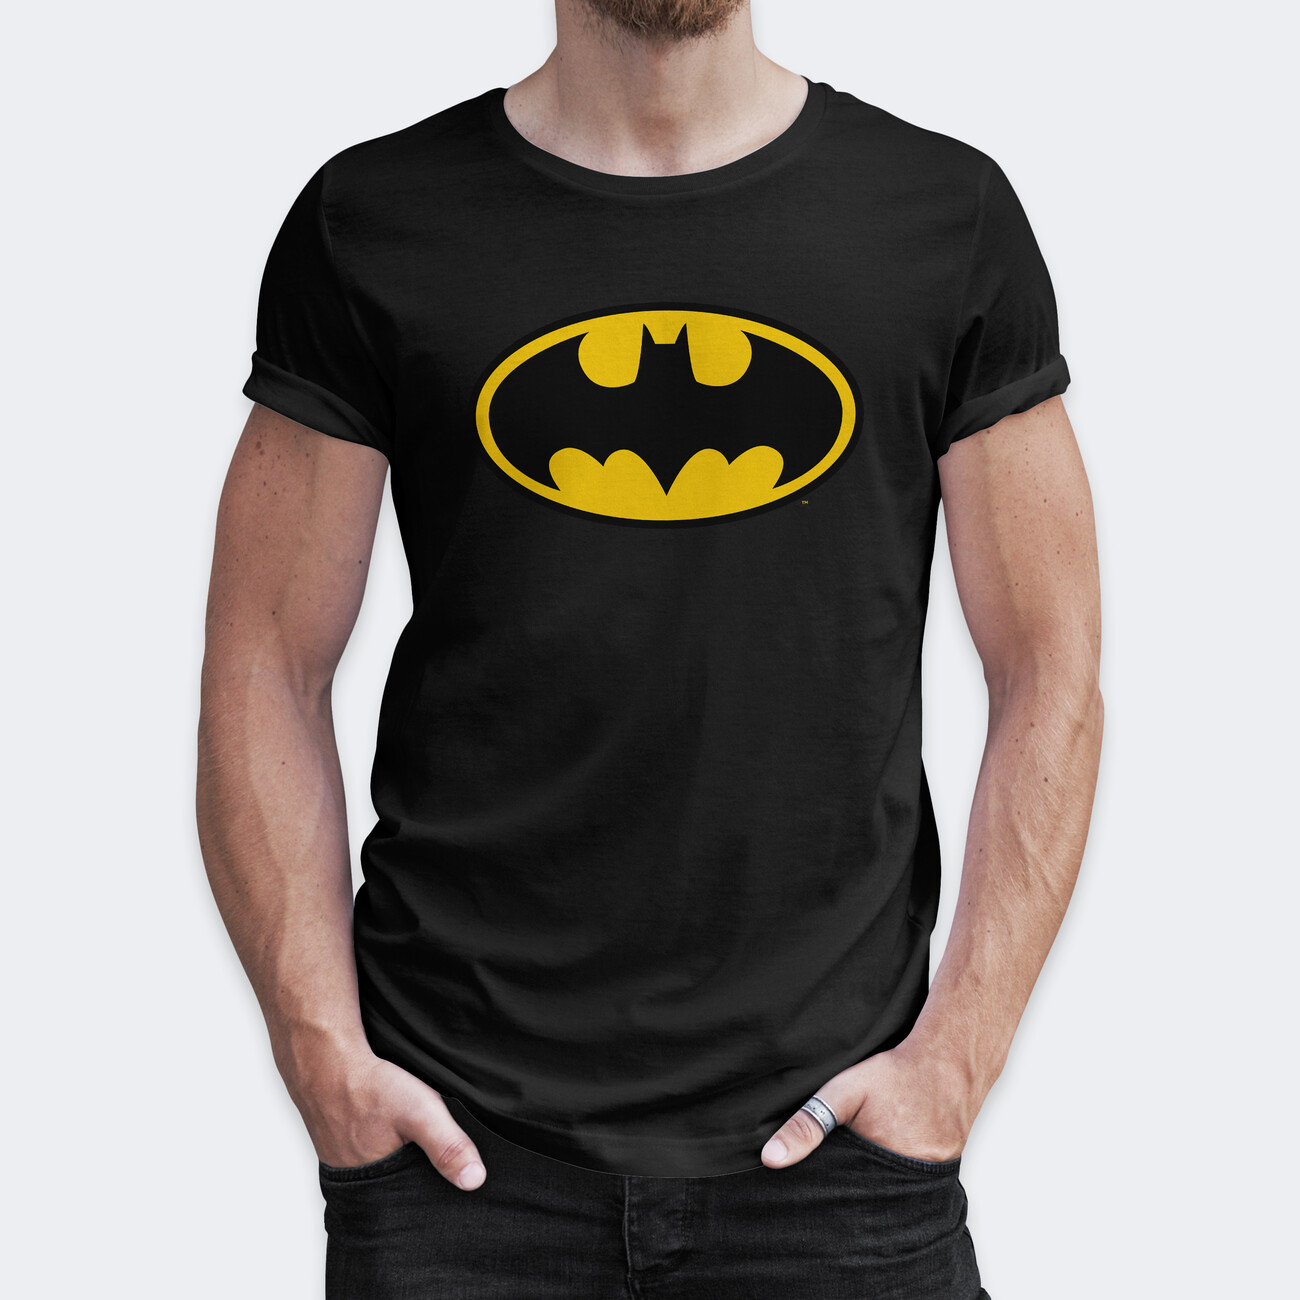 Batman - Logo | Clothes and accessories for merchandise fans